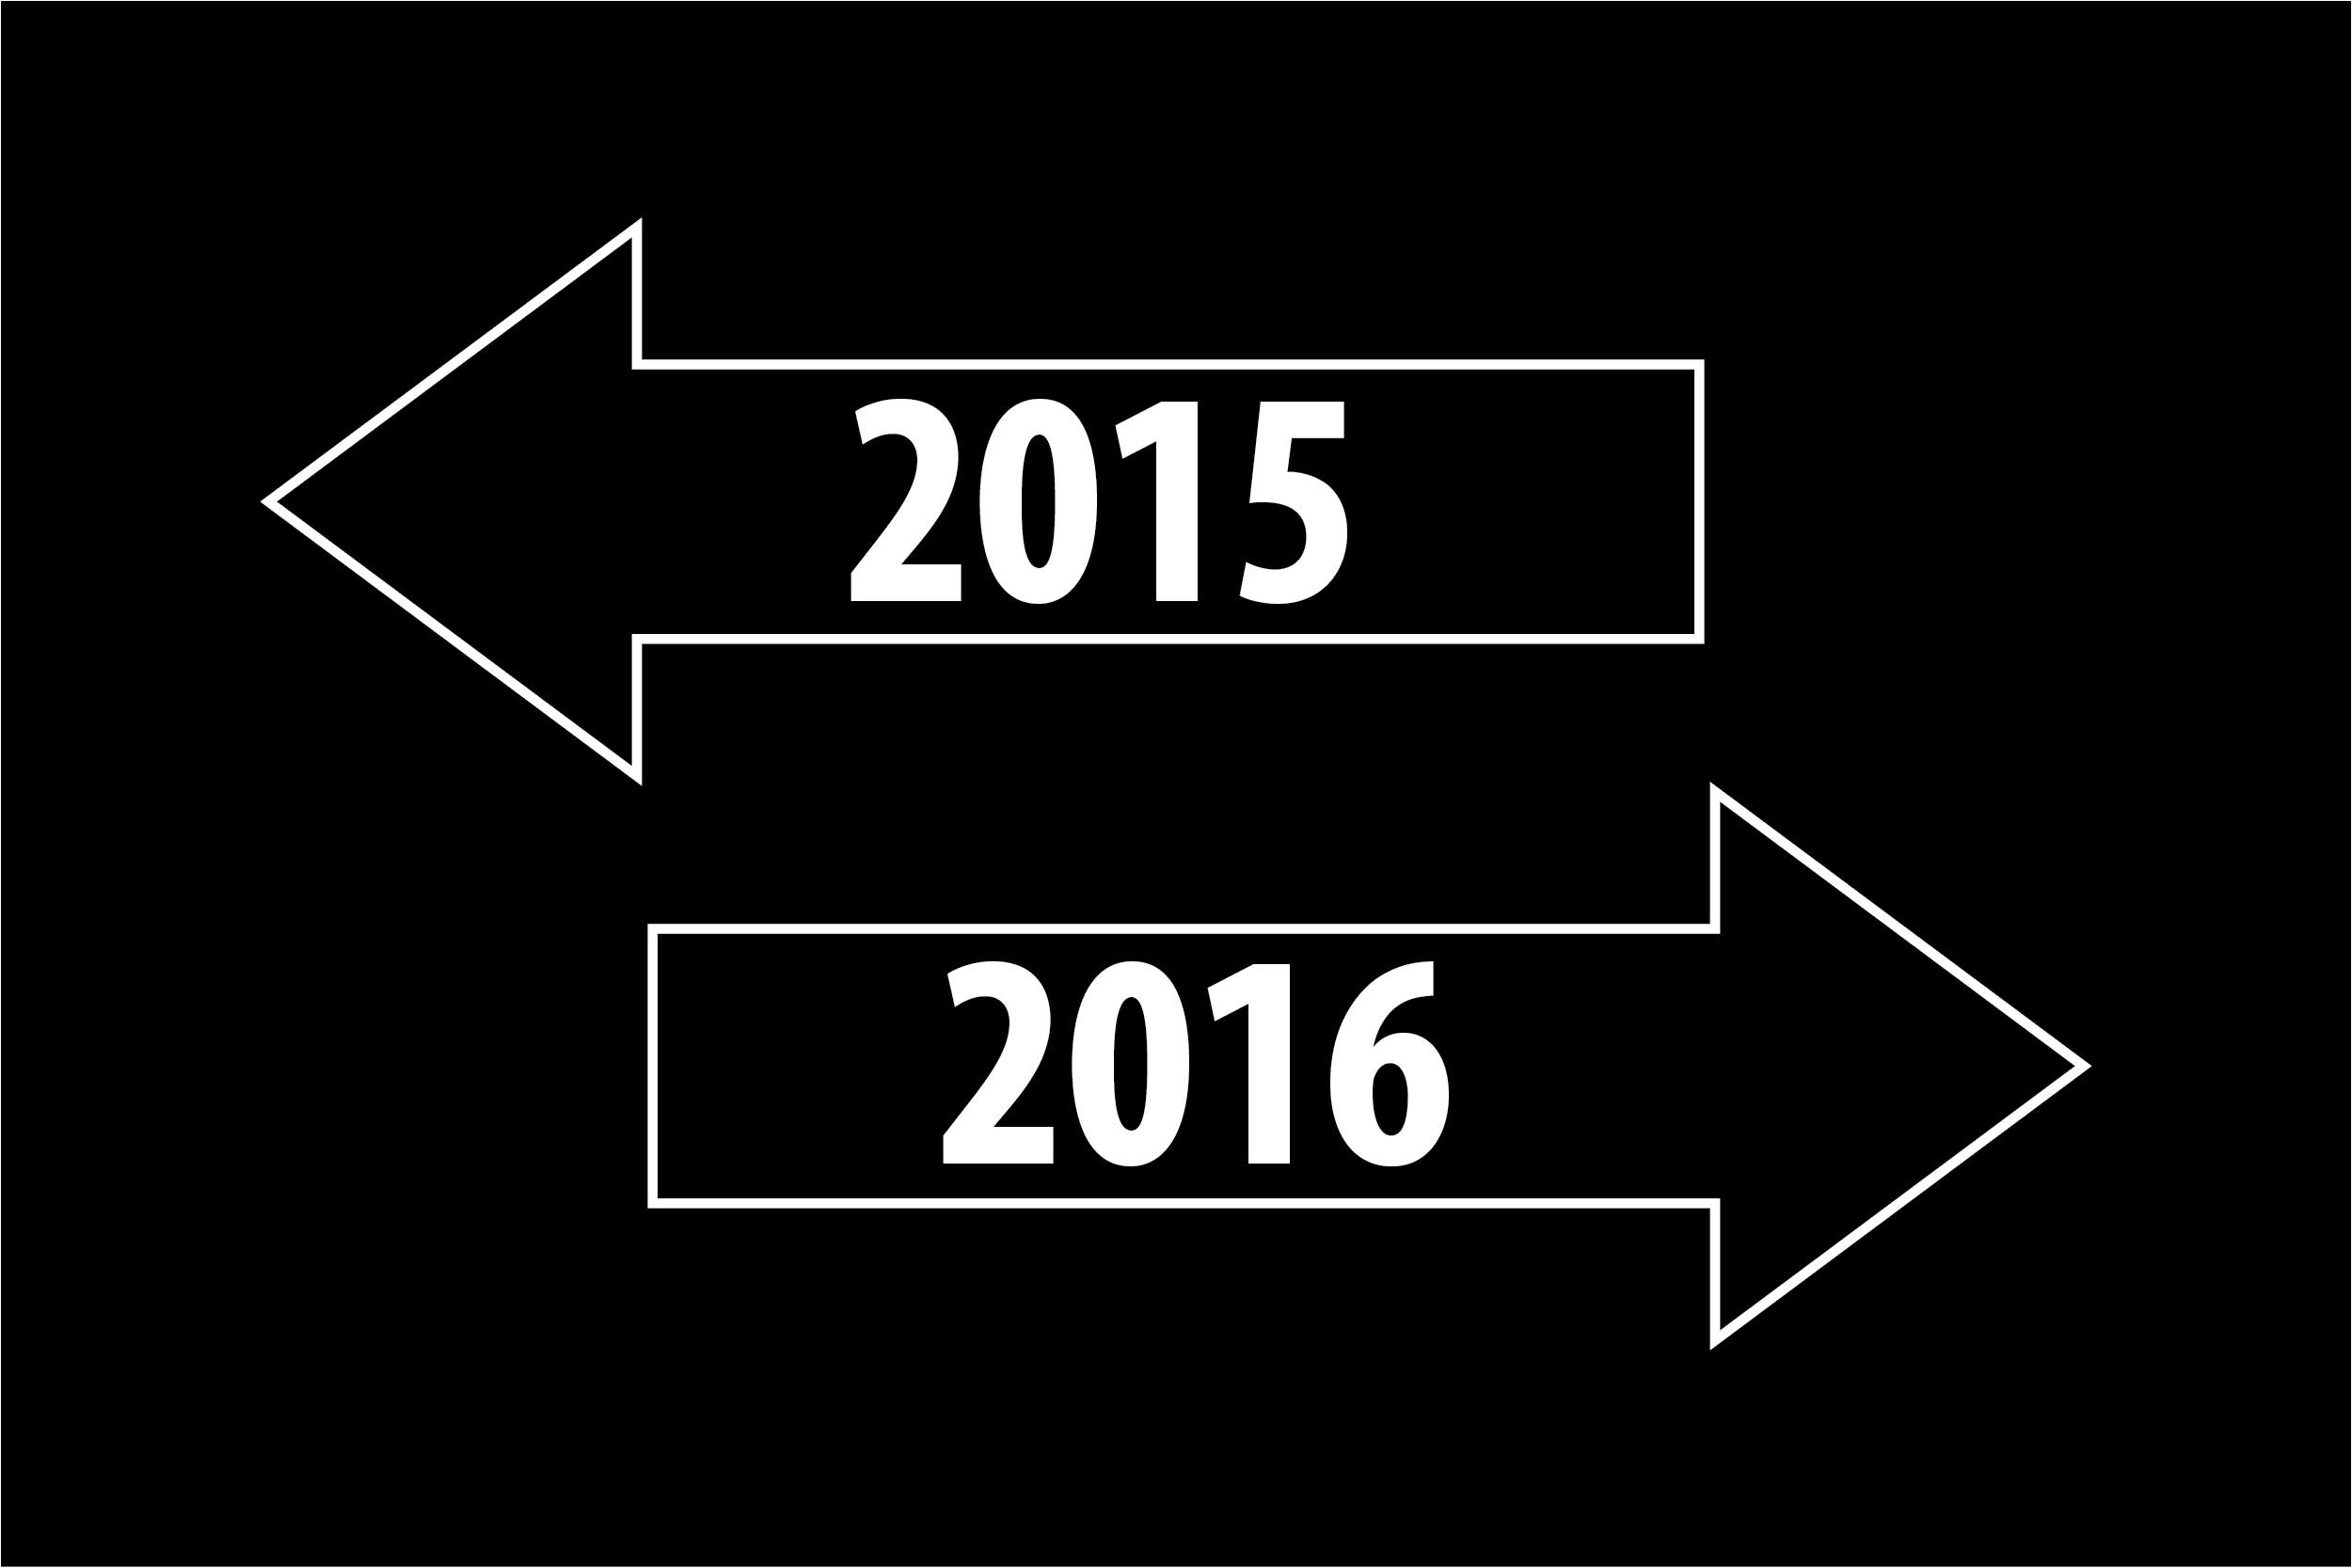 2015 into 2016